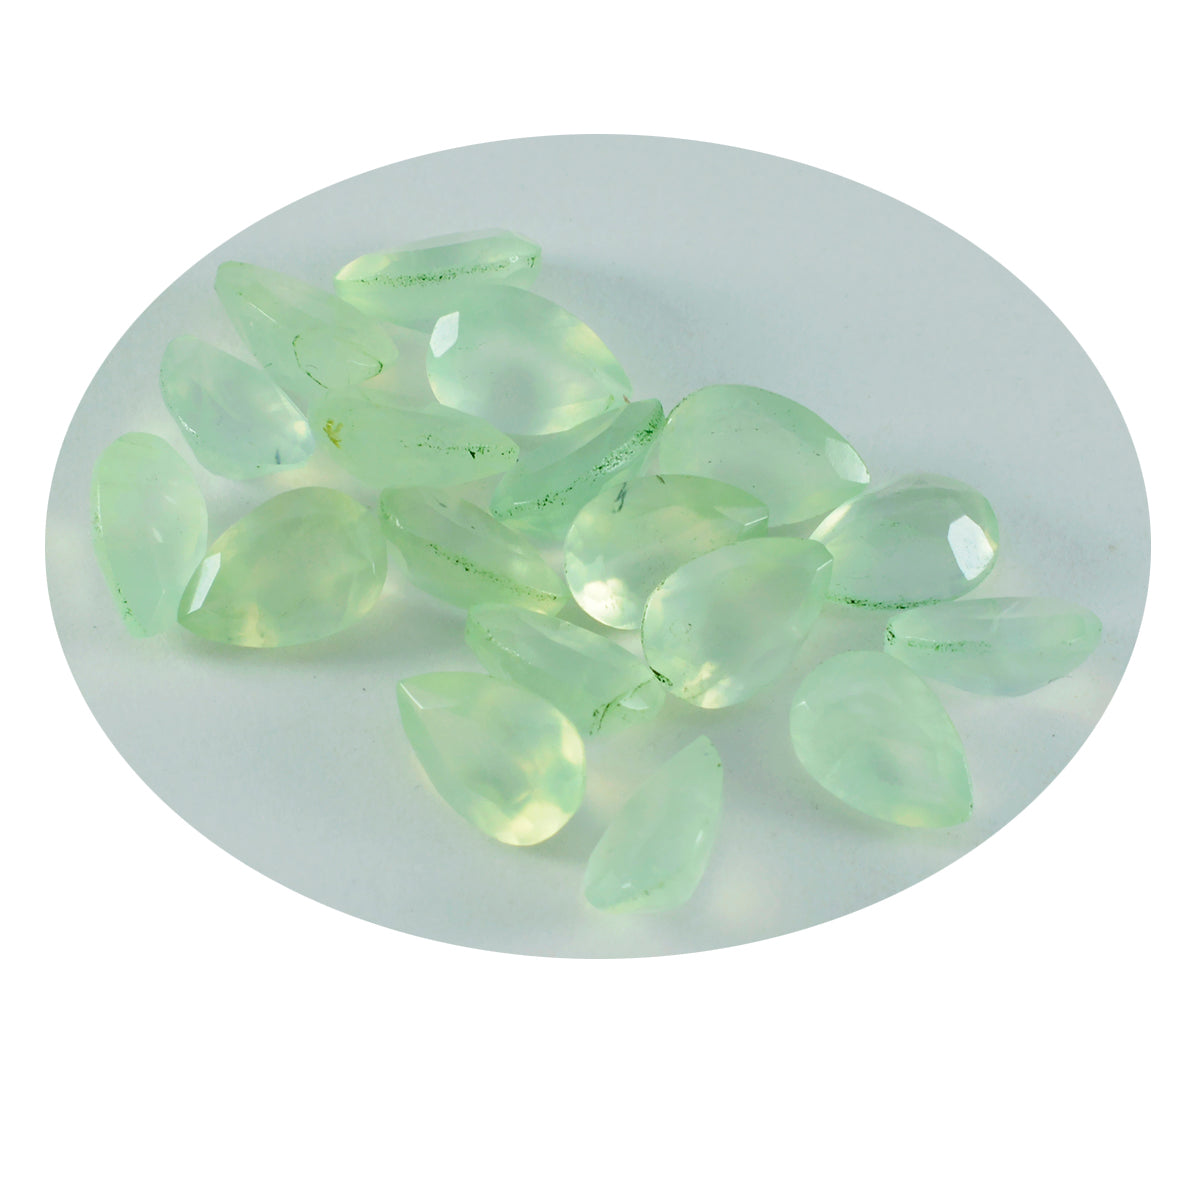 Riyogems 1PC Green Prehnite Faceted 5x7 mm Pear Shape great Quality Loose Gems